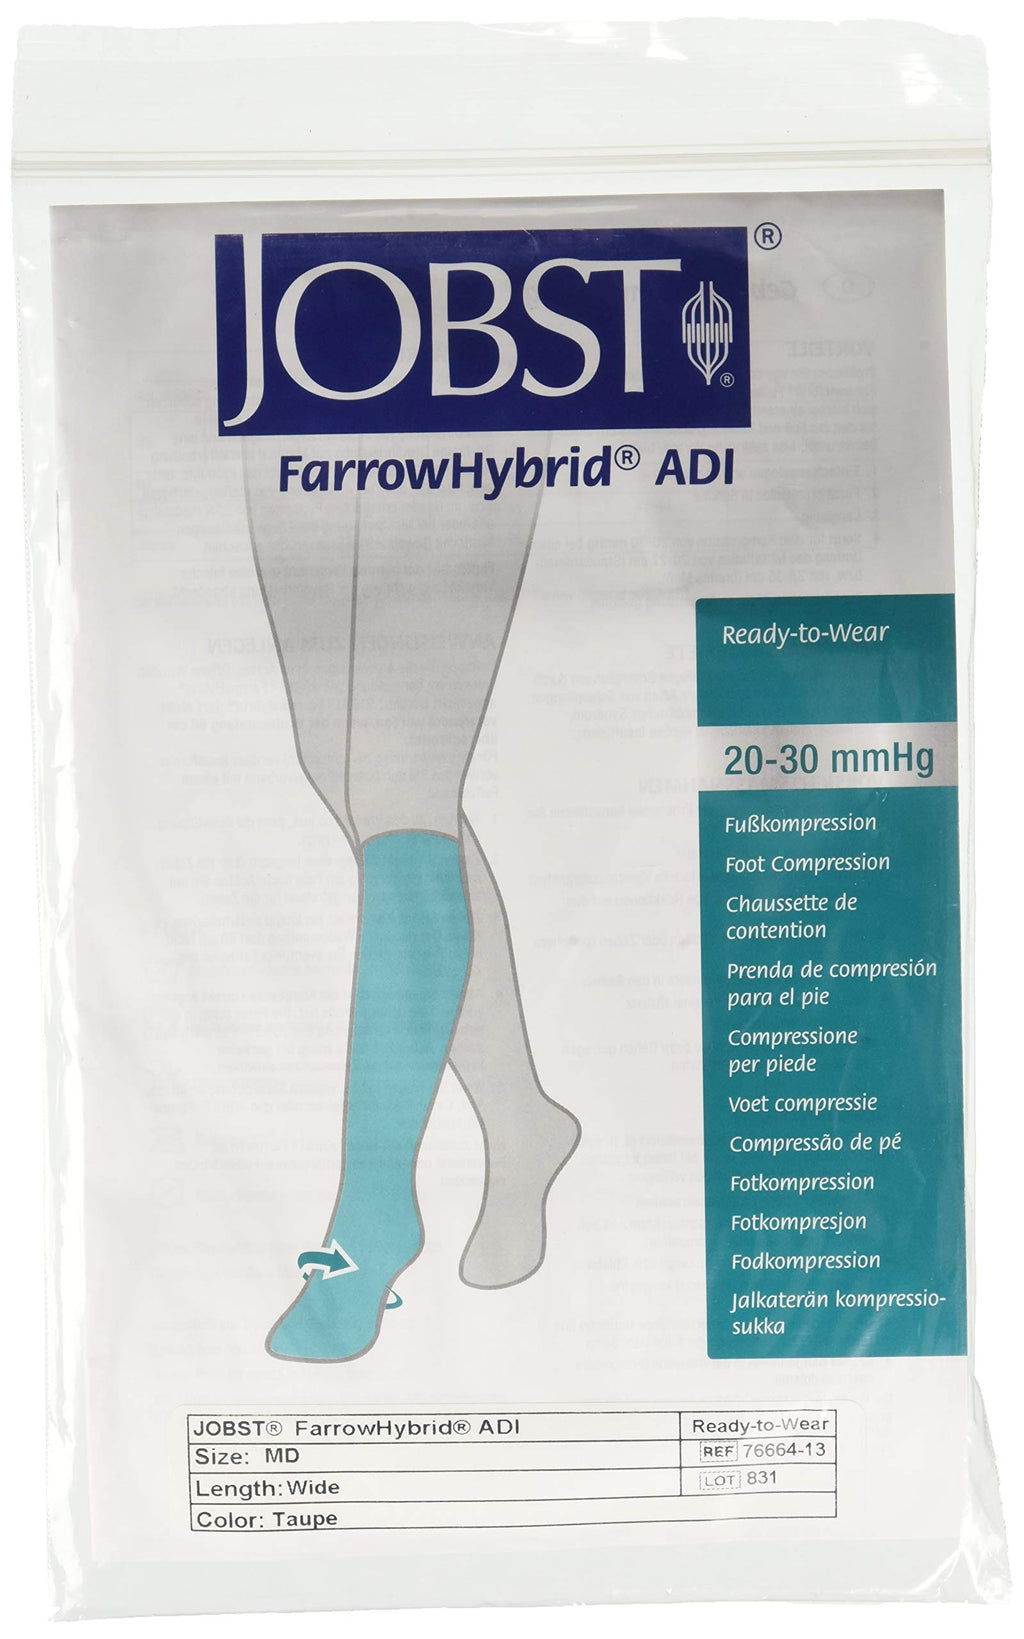 [Australia] - FarrowHybrid ADI ADII Liner/Sock Pair, Foot Compression, BSN Jobst FarrowMed Hybrid Class1-Wide/Med Taupe 